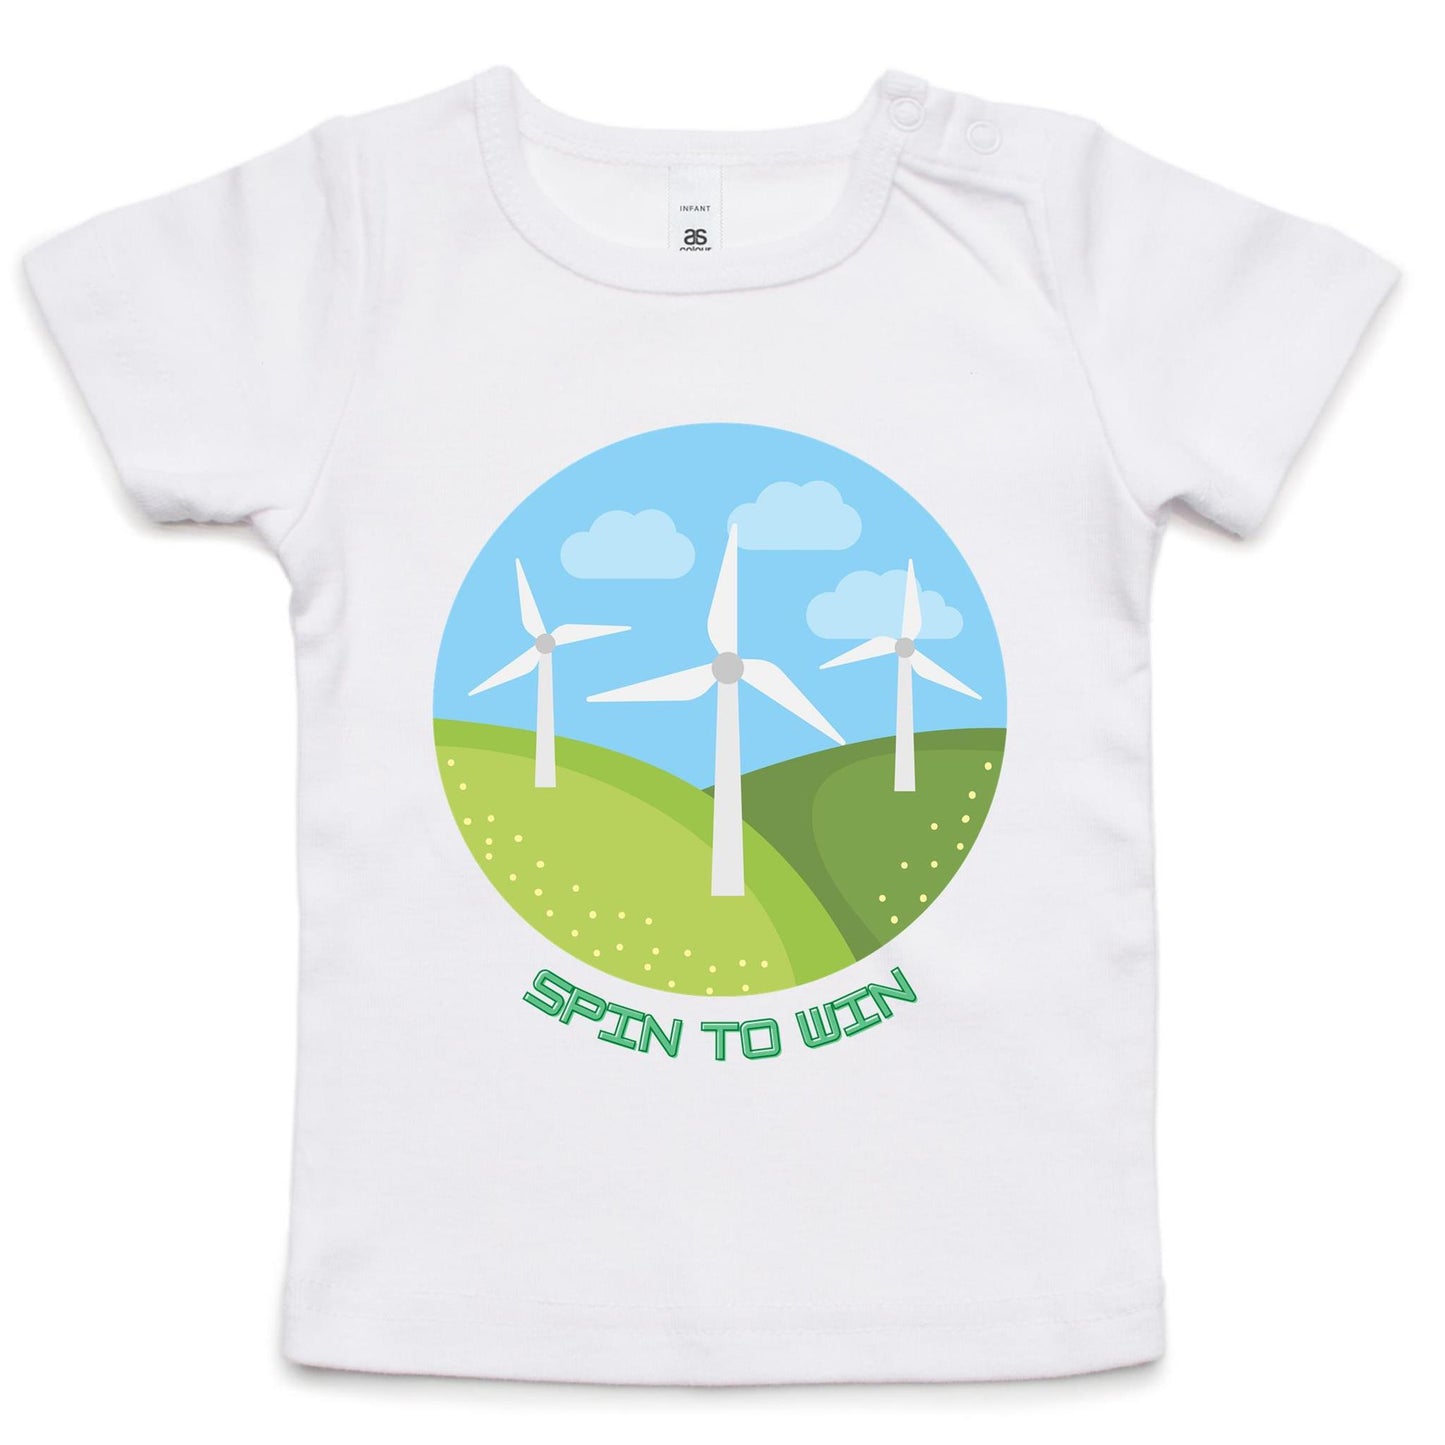 Spin To Win - Baby T-shirt White Baby T-shirt Environment kids